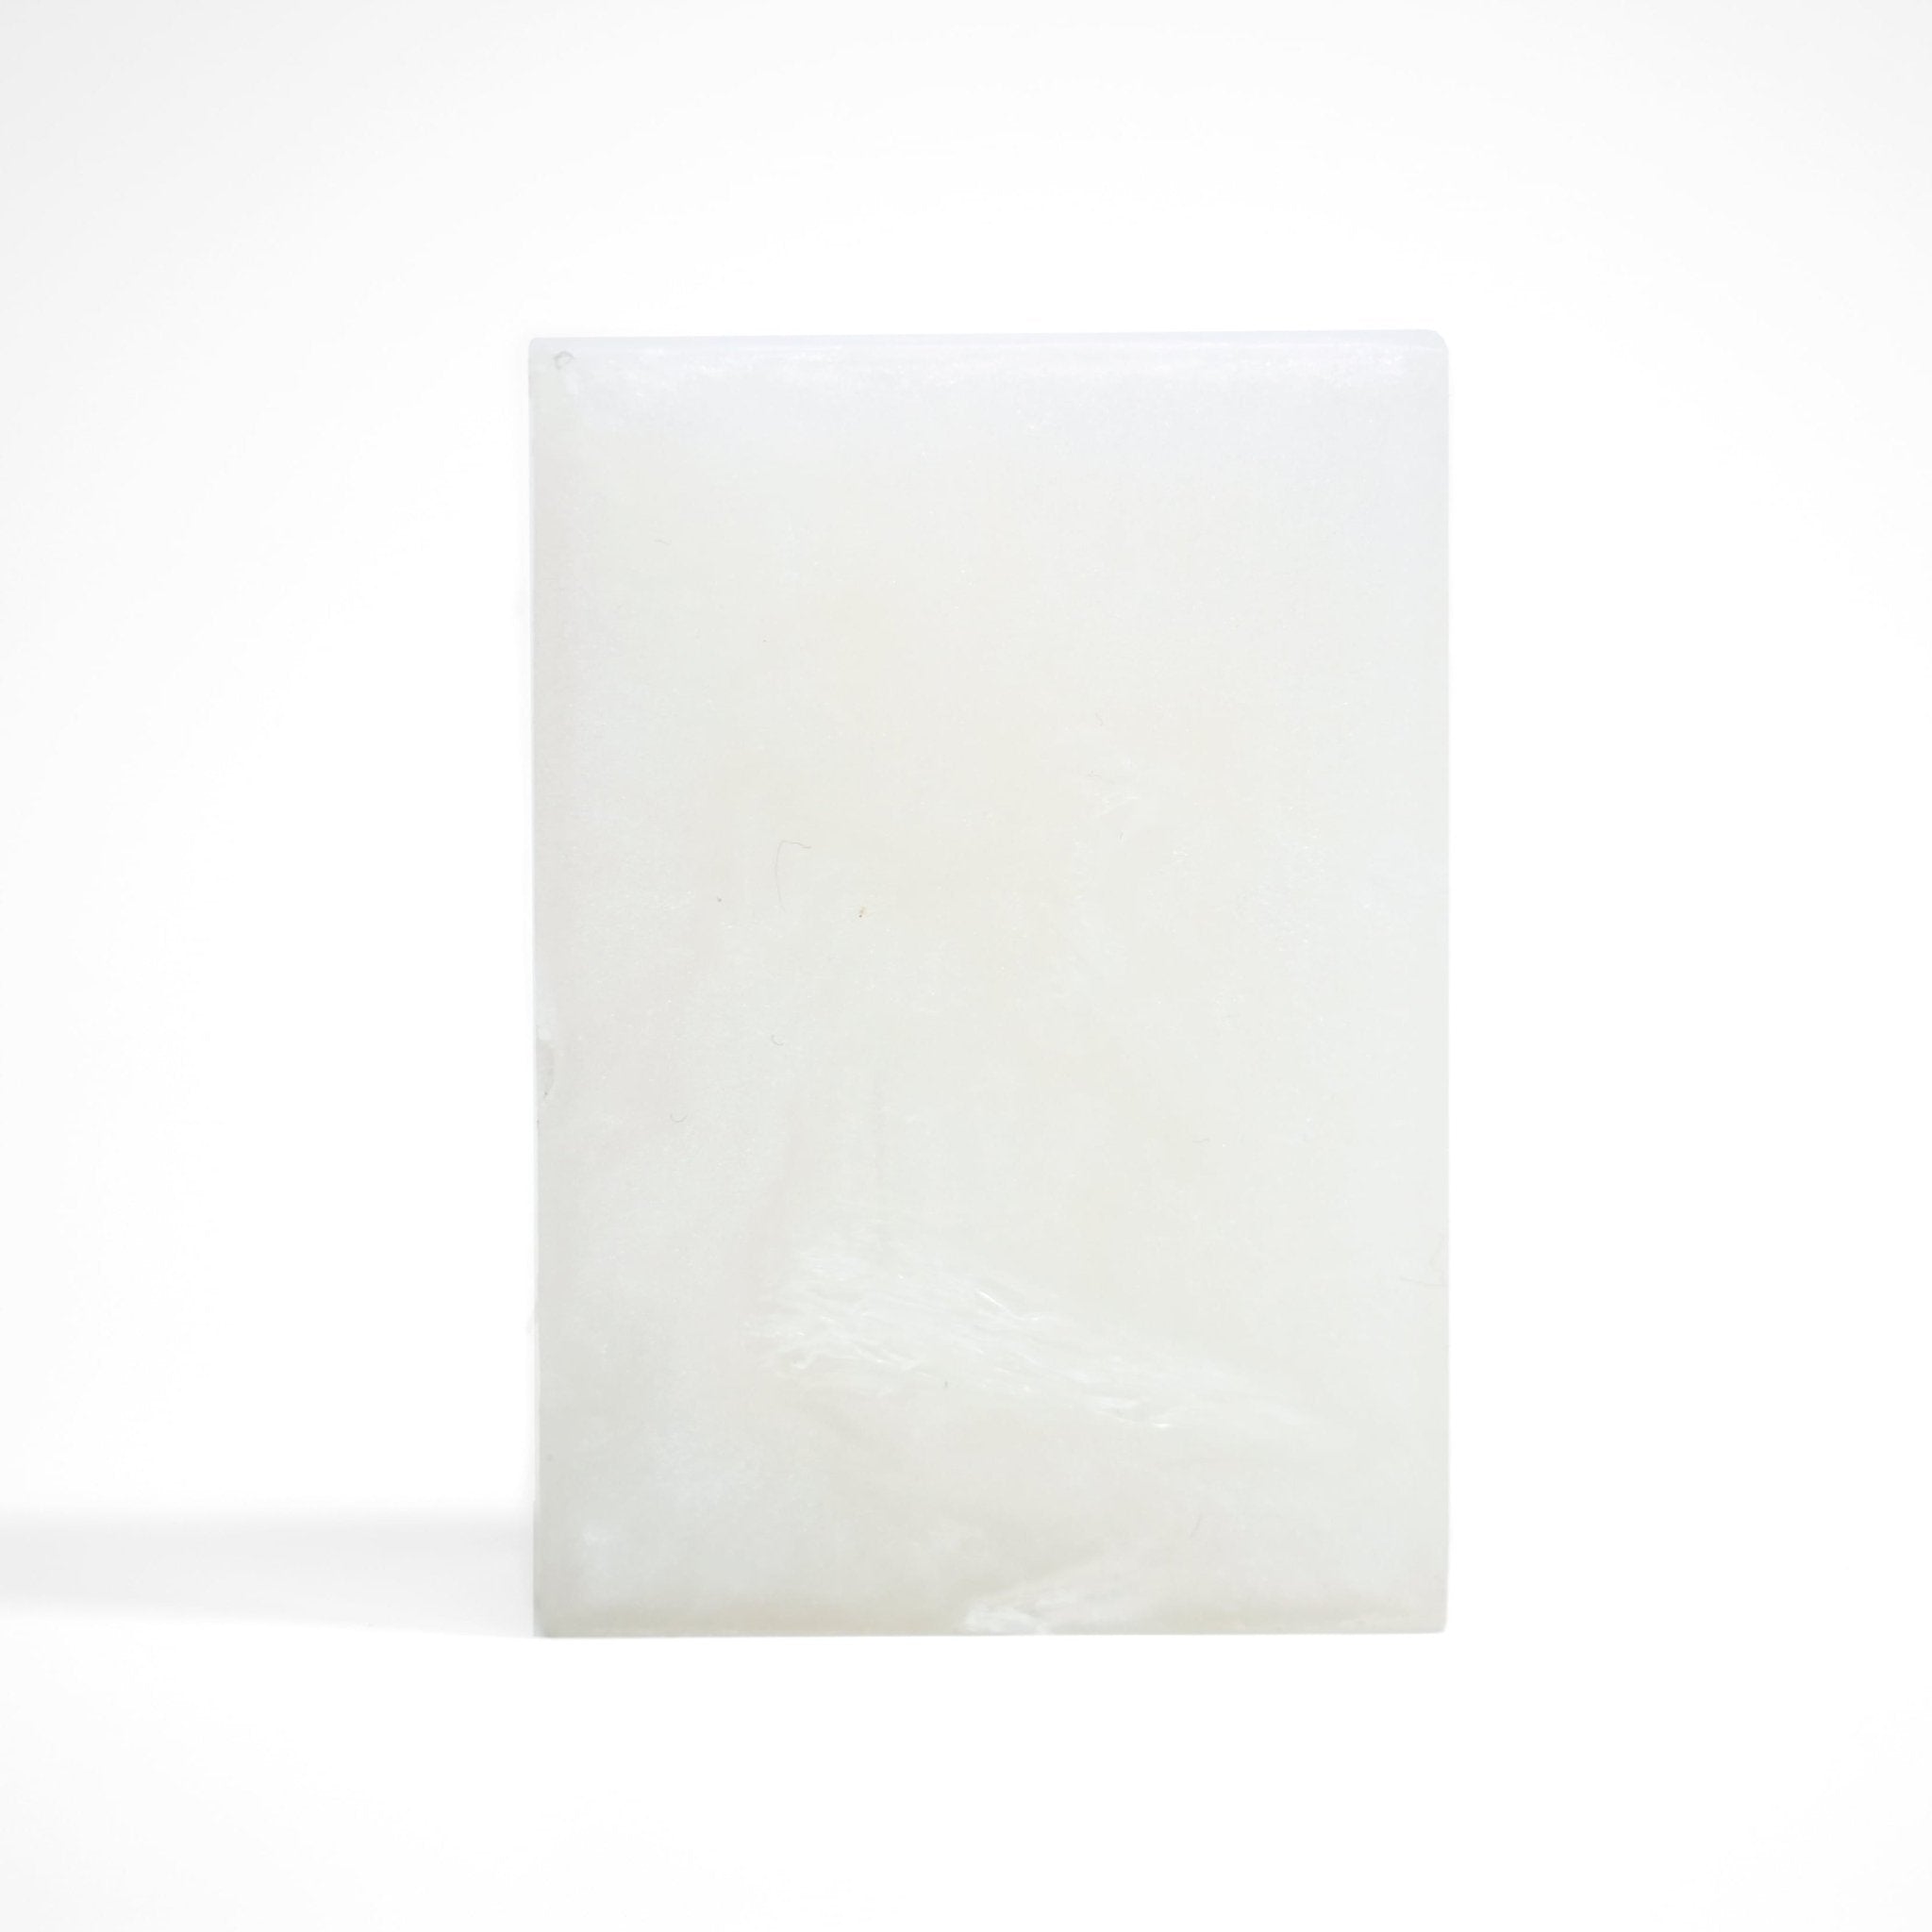 【Natural origin, for sensitive skin.】MOMGDERO Craft Soap Pearl White HB - Tokyo Fresh Direct